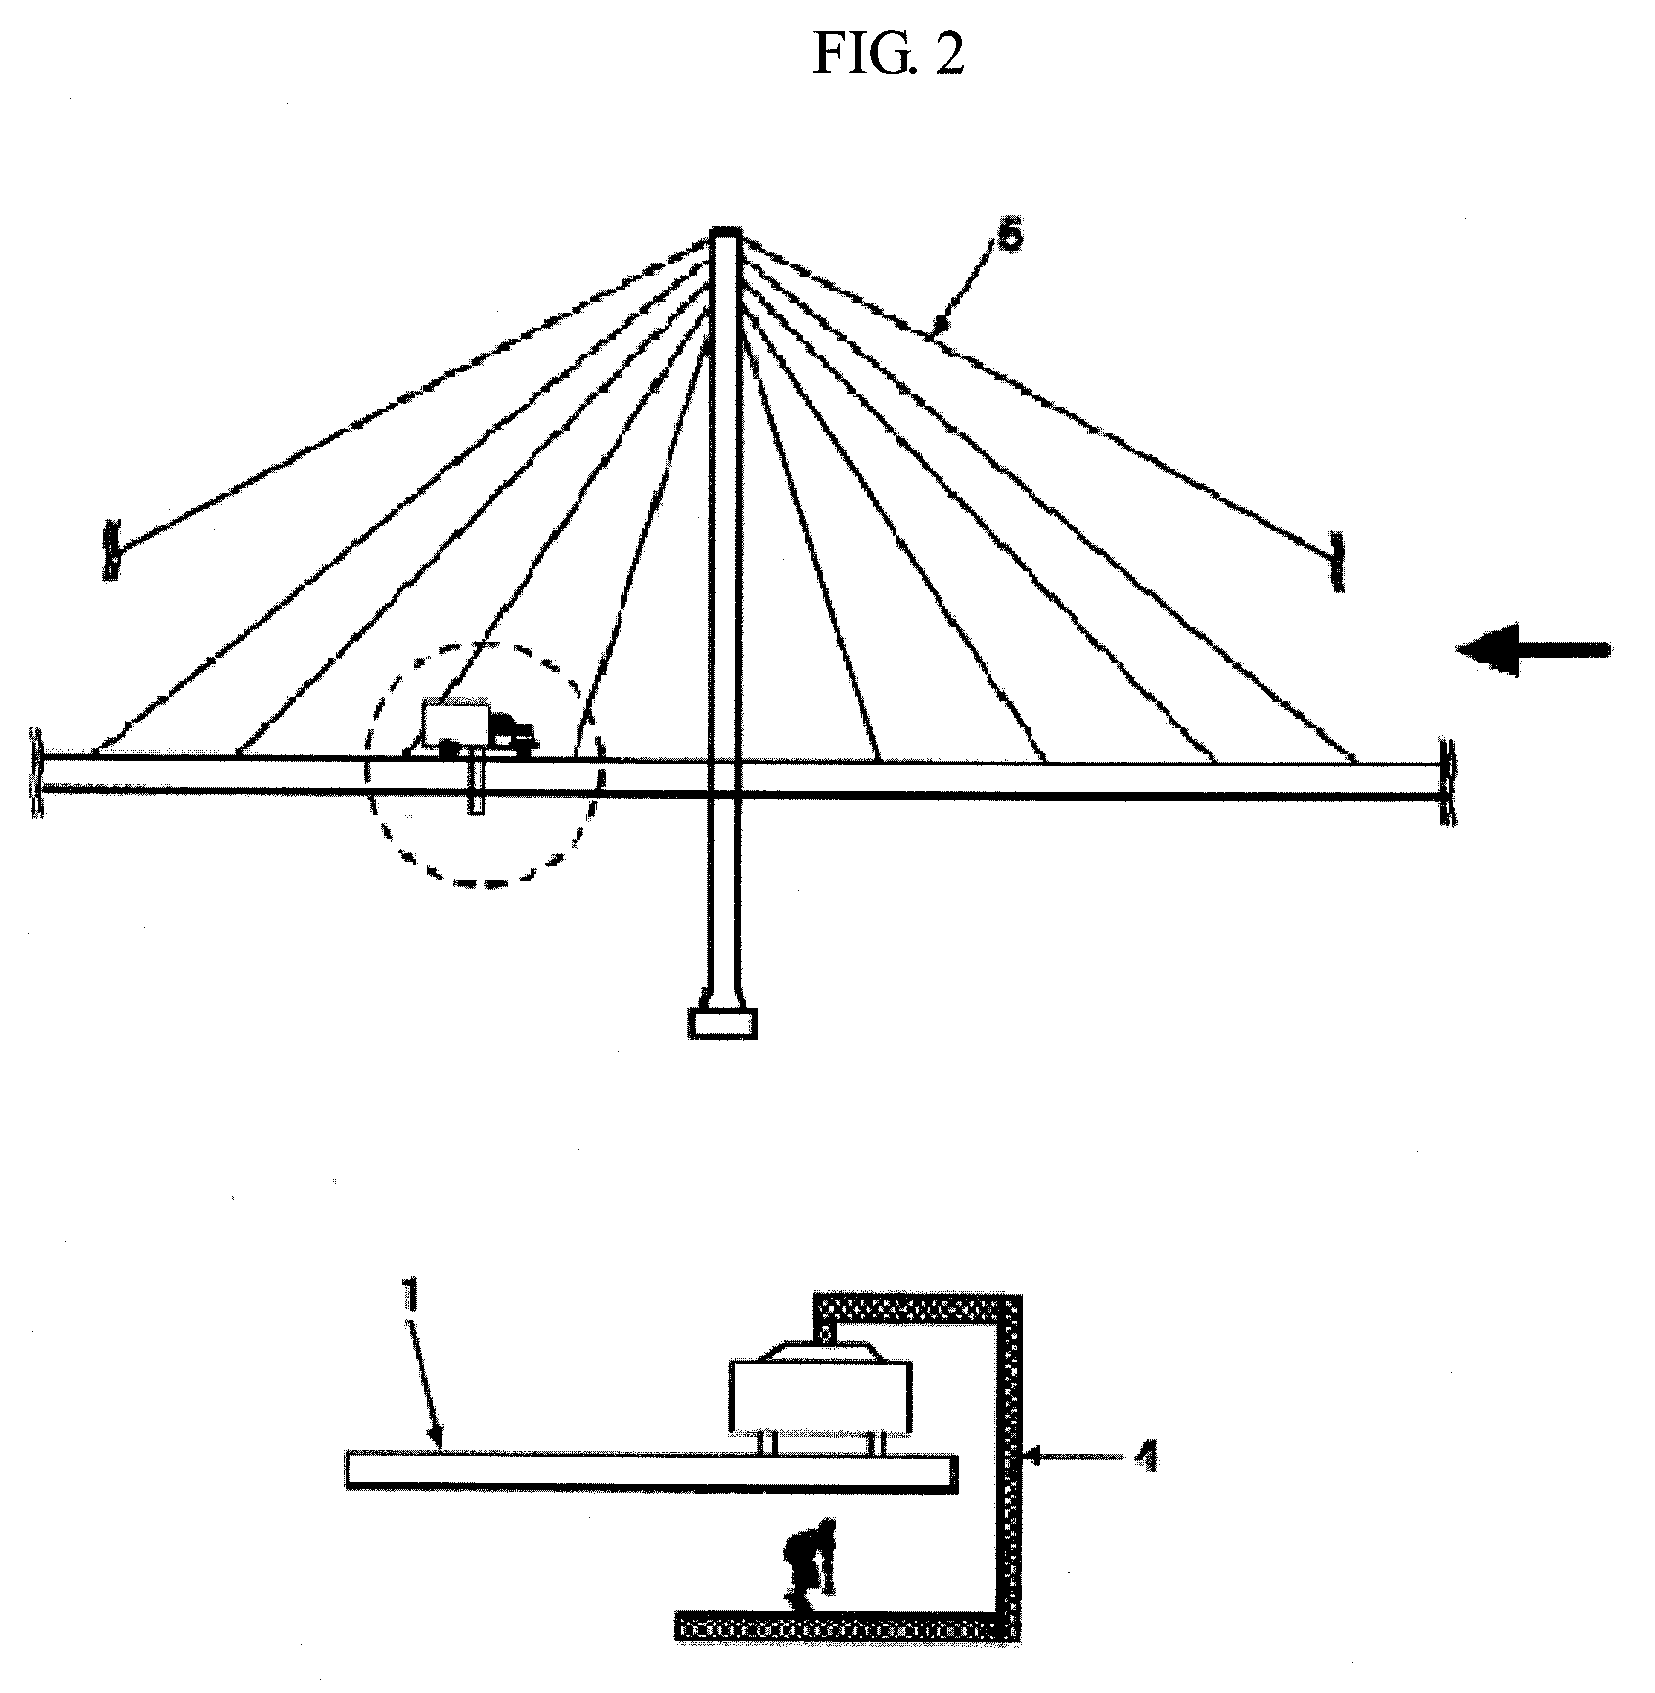 Method of controlling robot for bridge inspection